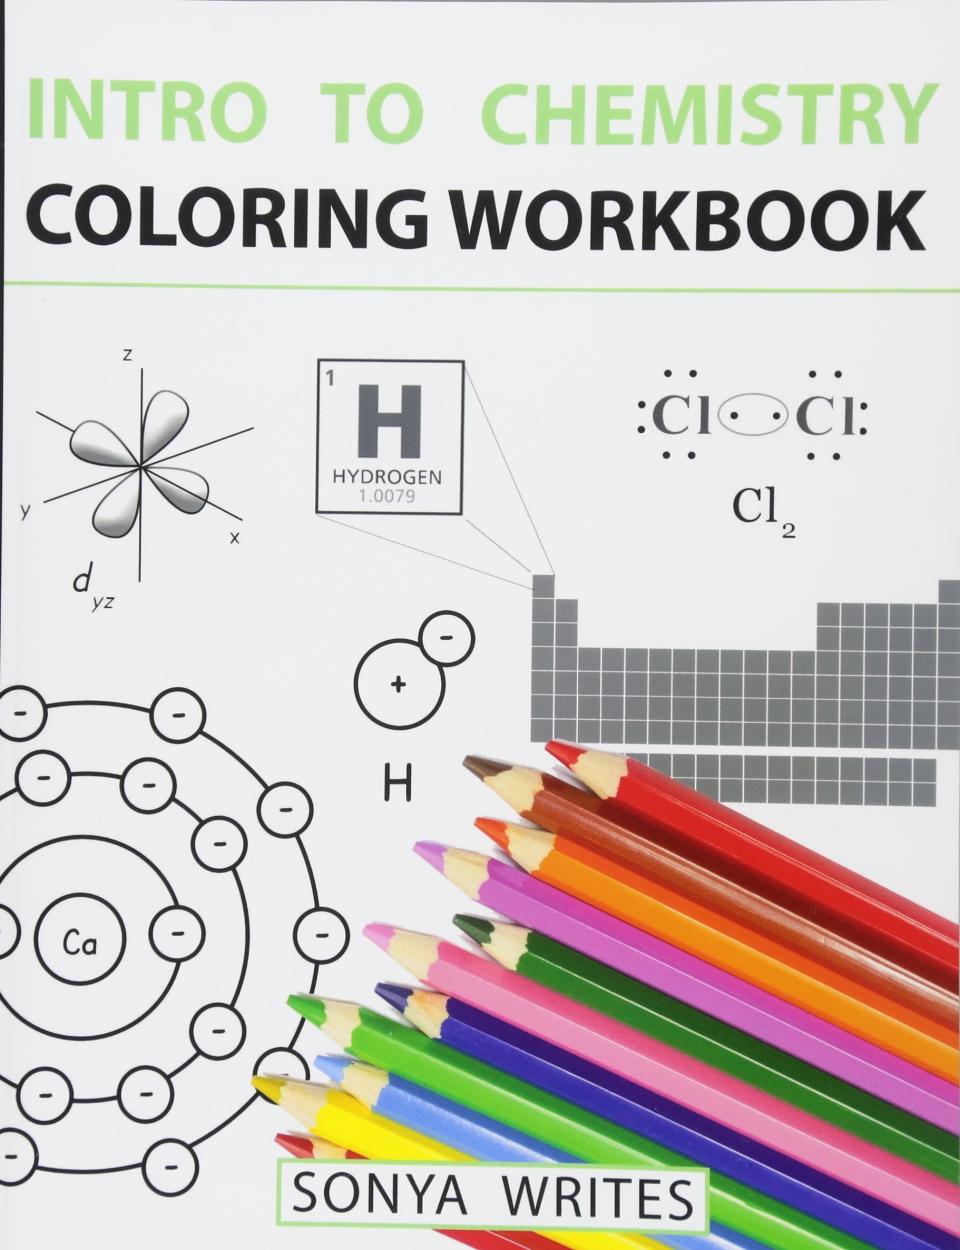 Intro to Chemistry Coloring Workbook. Image via Amazon.